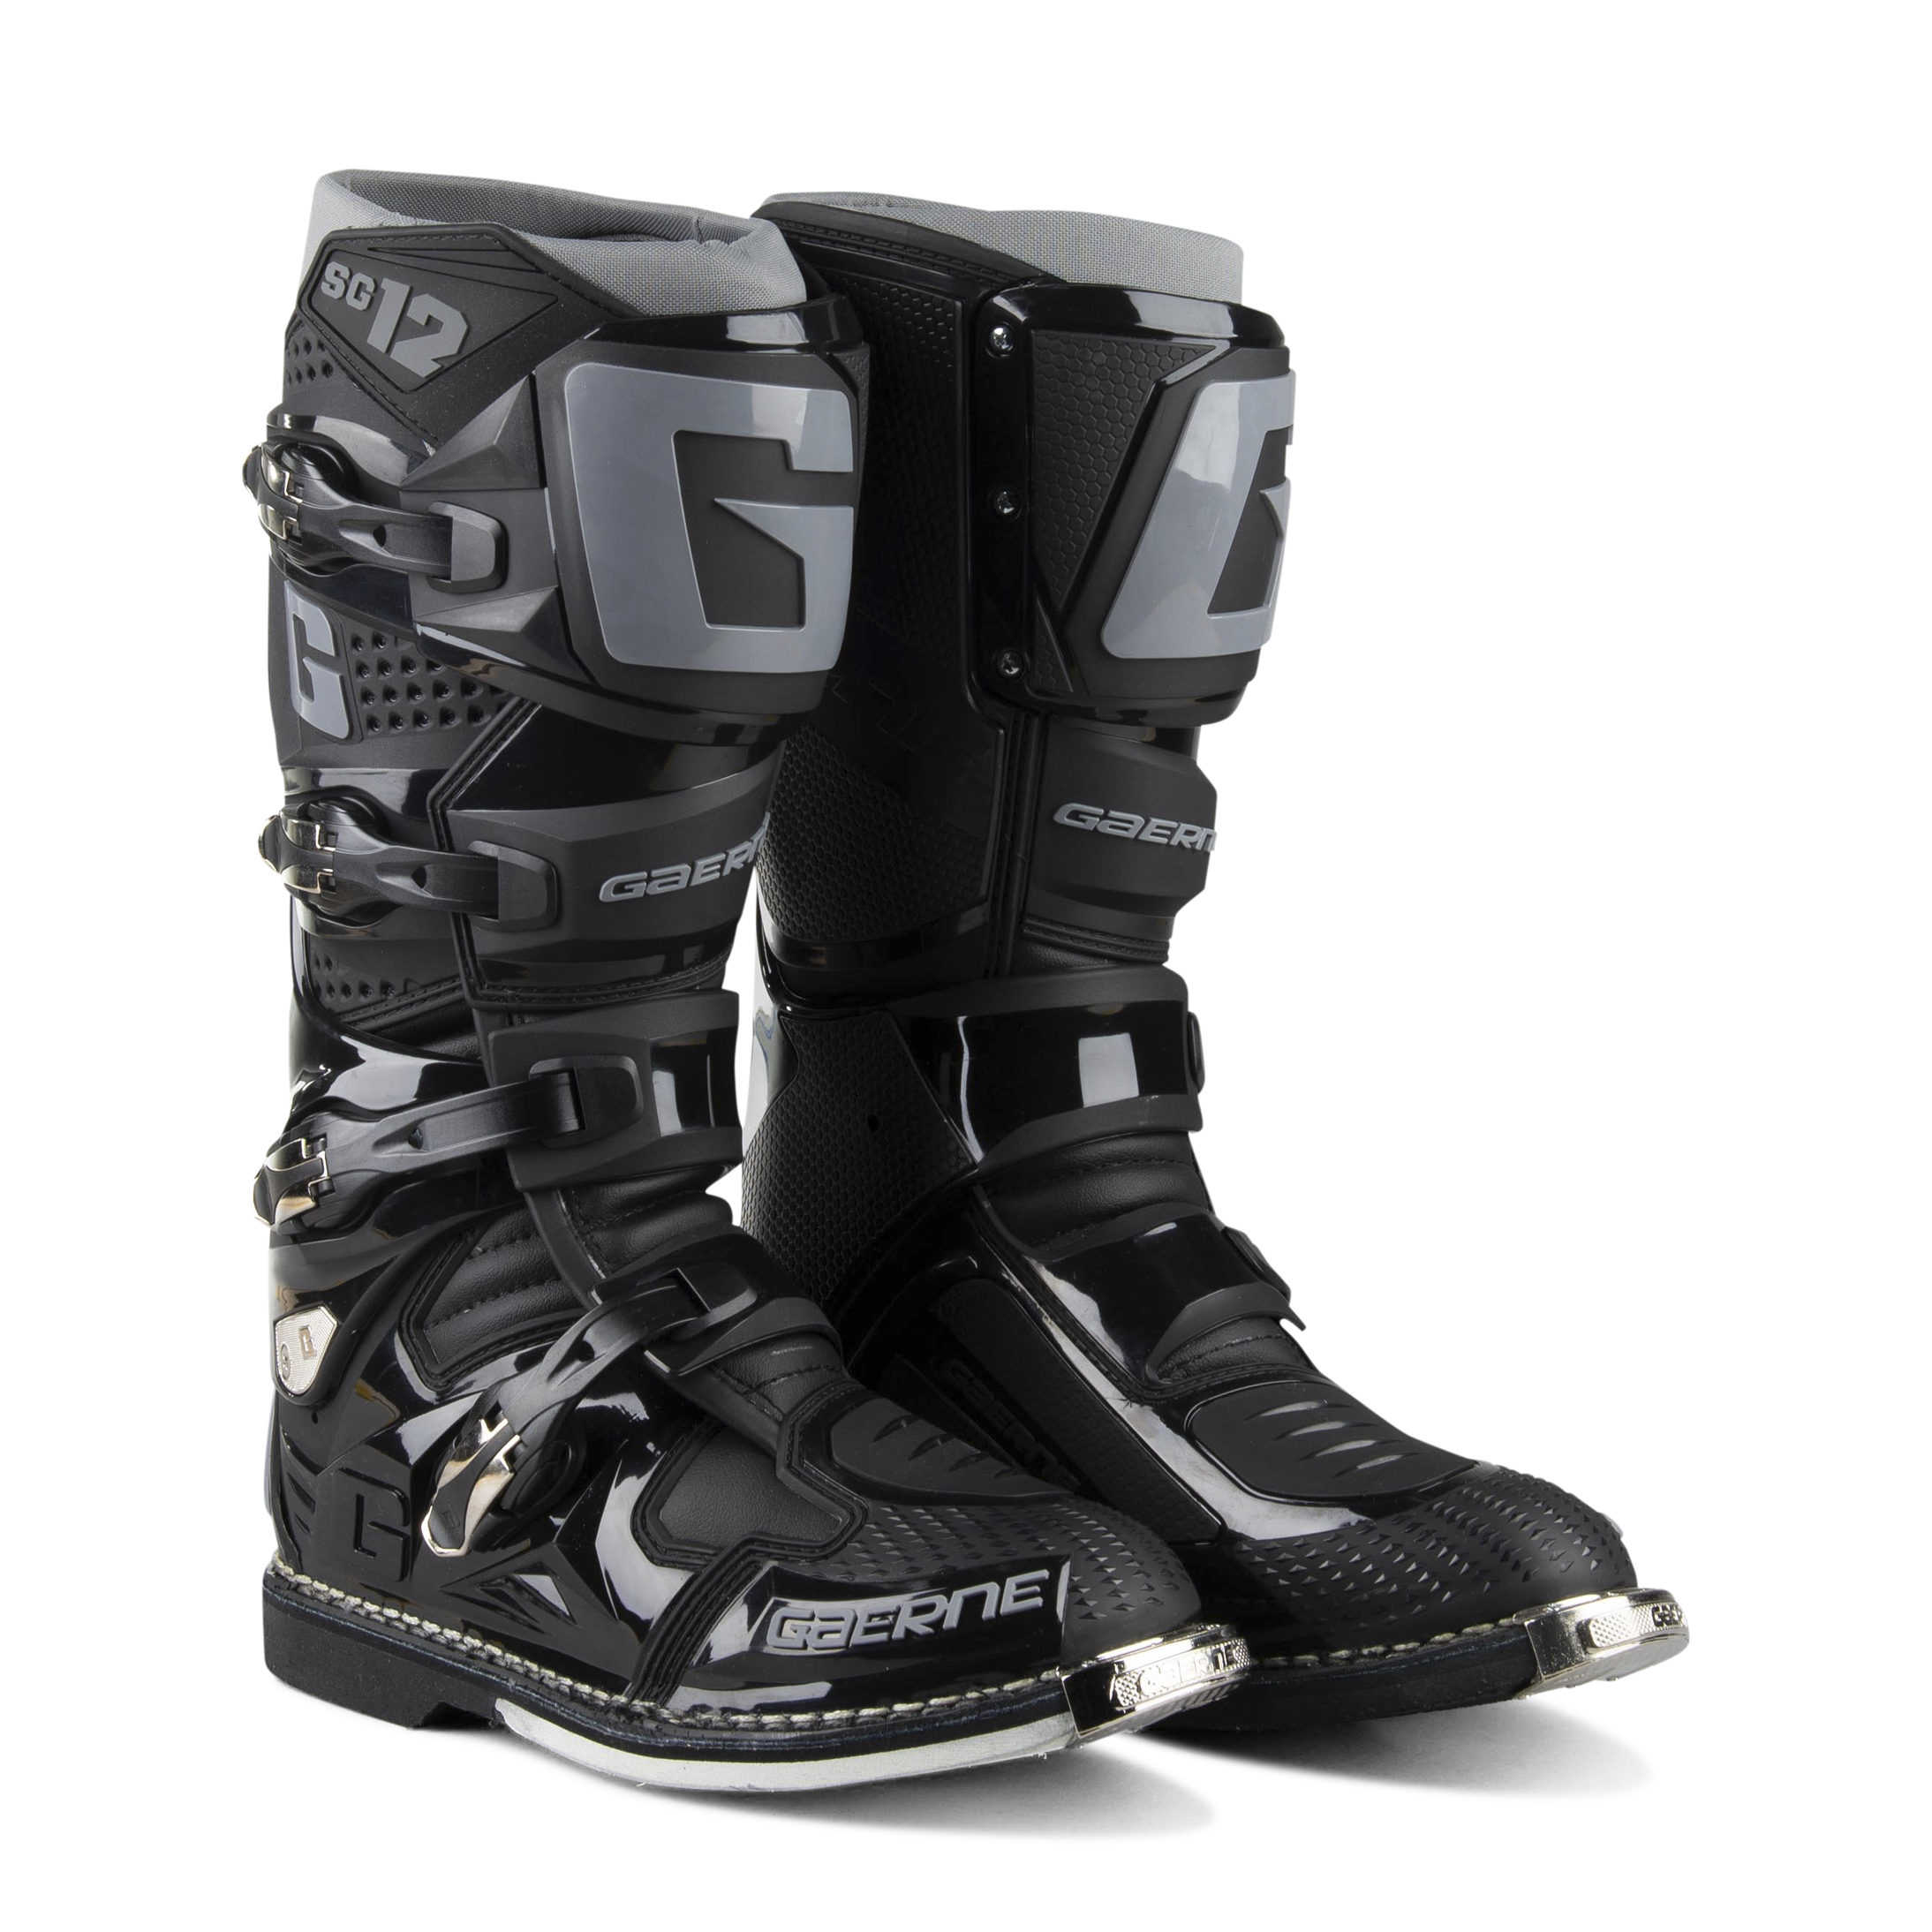 Gaerne SG-12 MX Boots Black - Now 10 